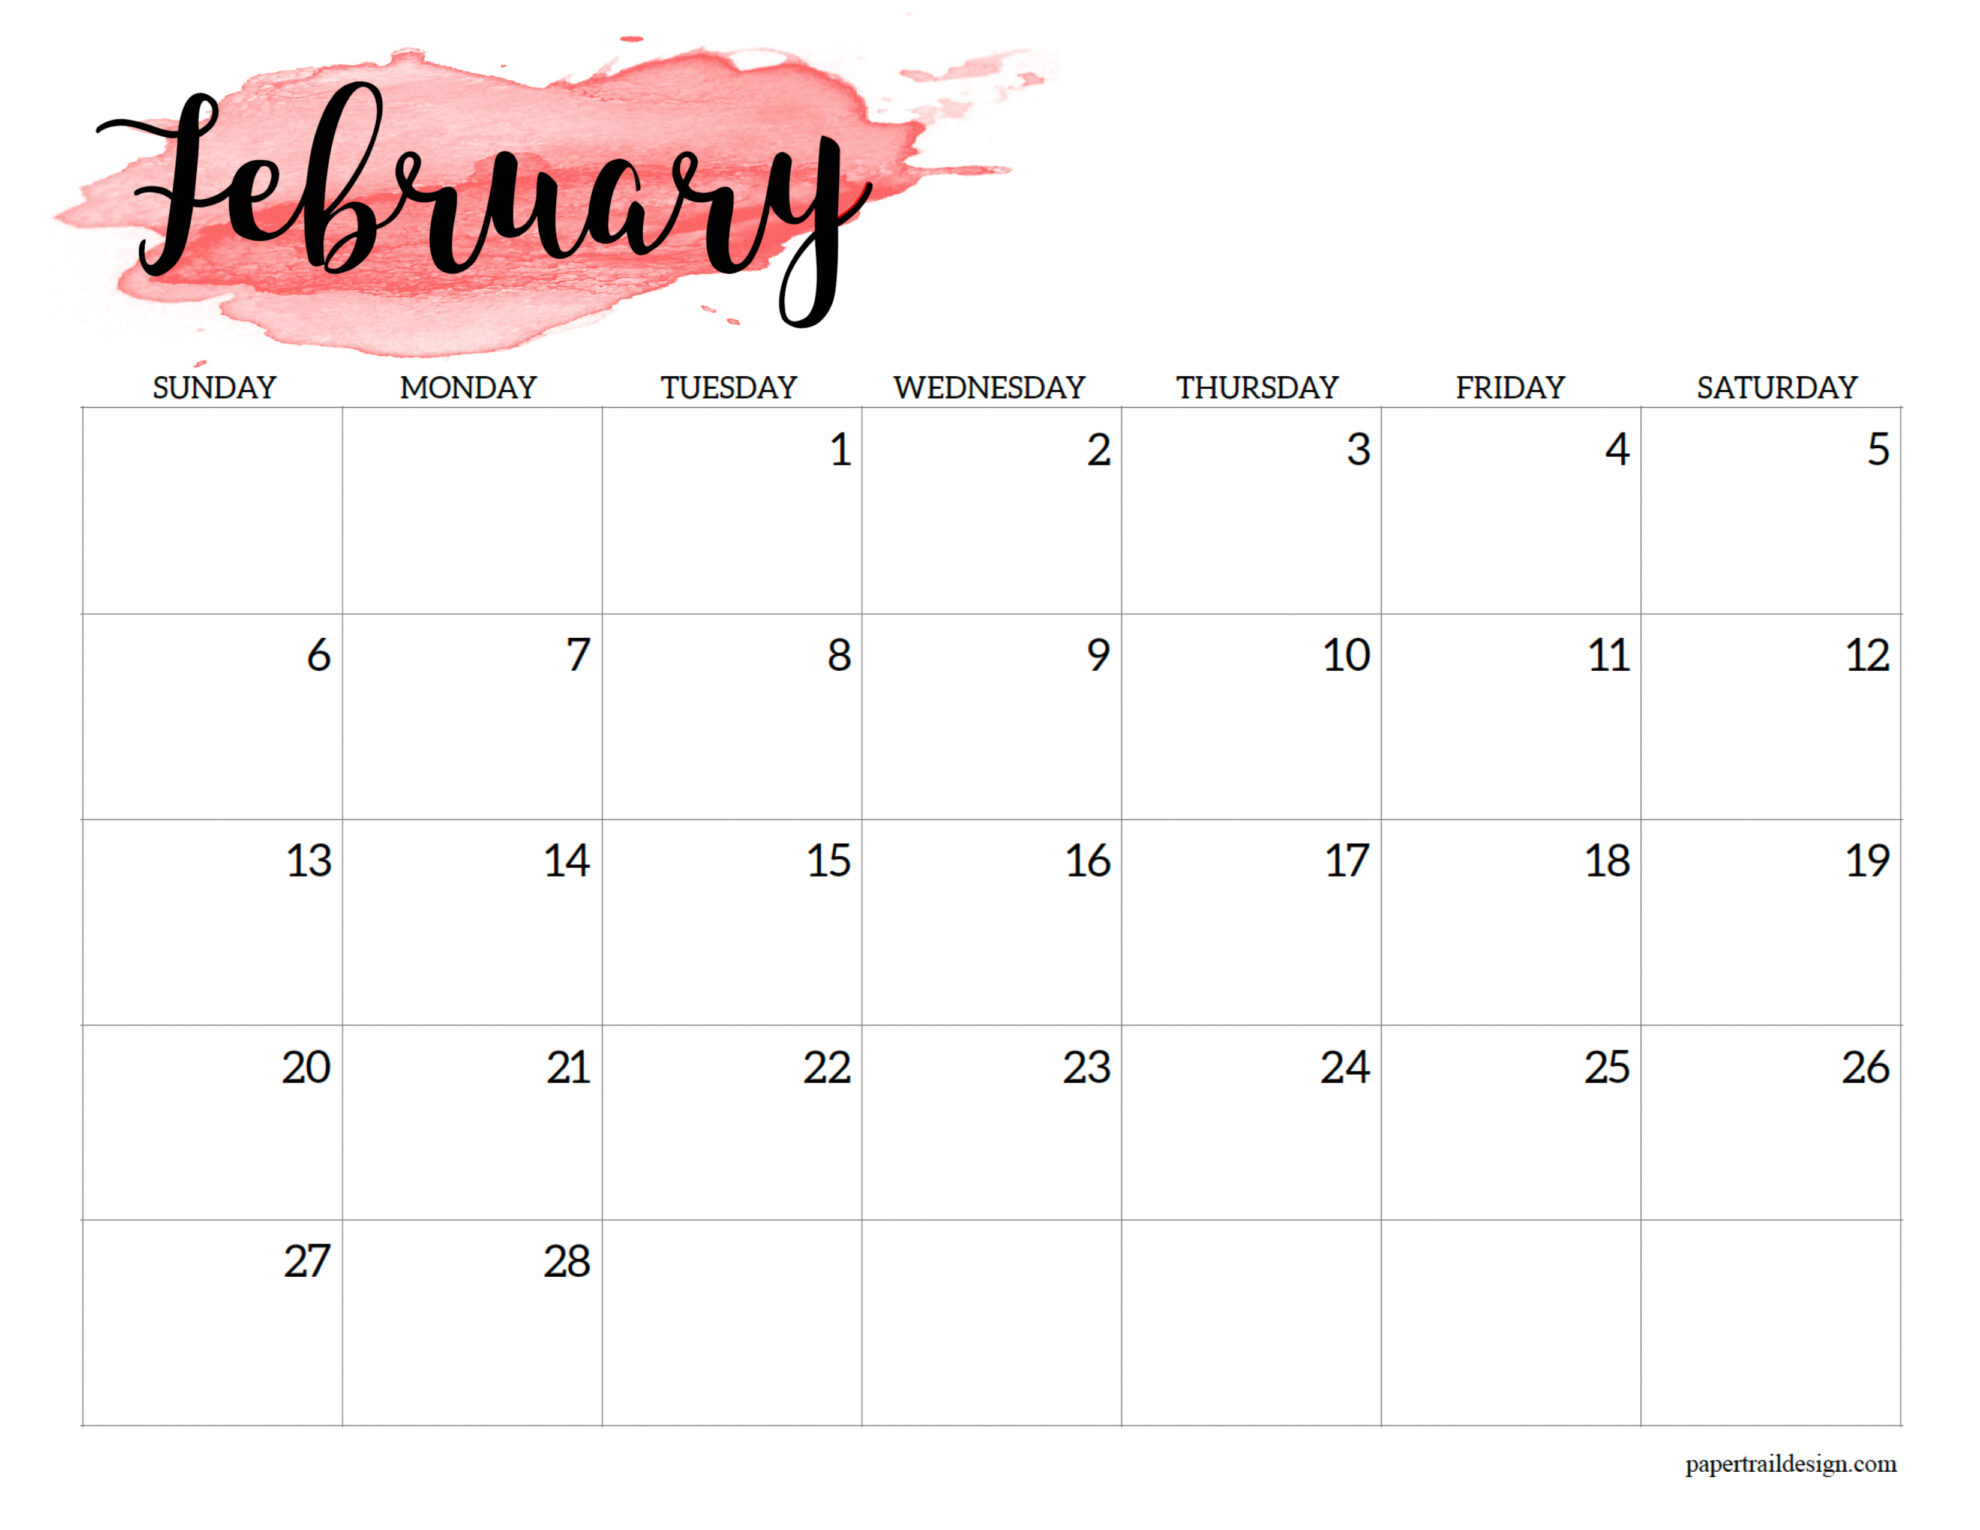 Monthly Calendar February 2022 2022 Calendar Printable - Watercolor - Paper Trail Design